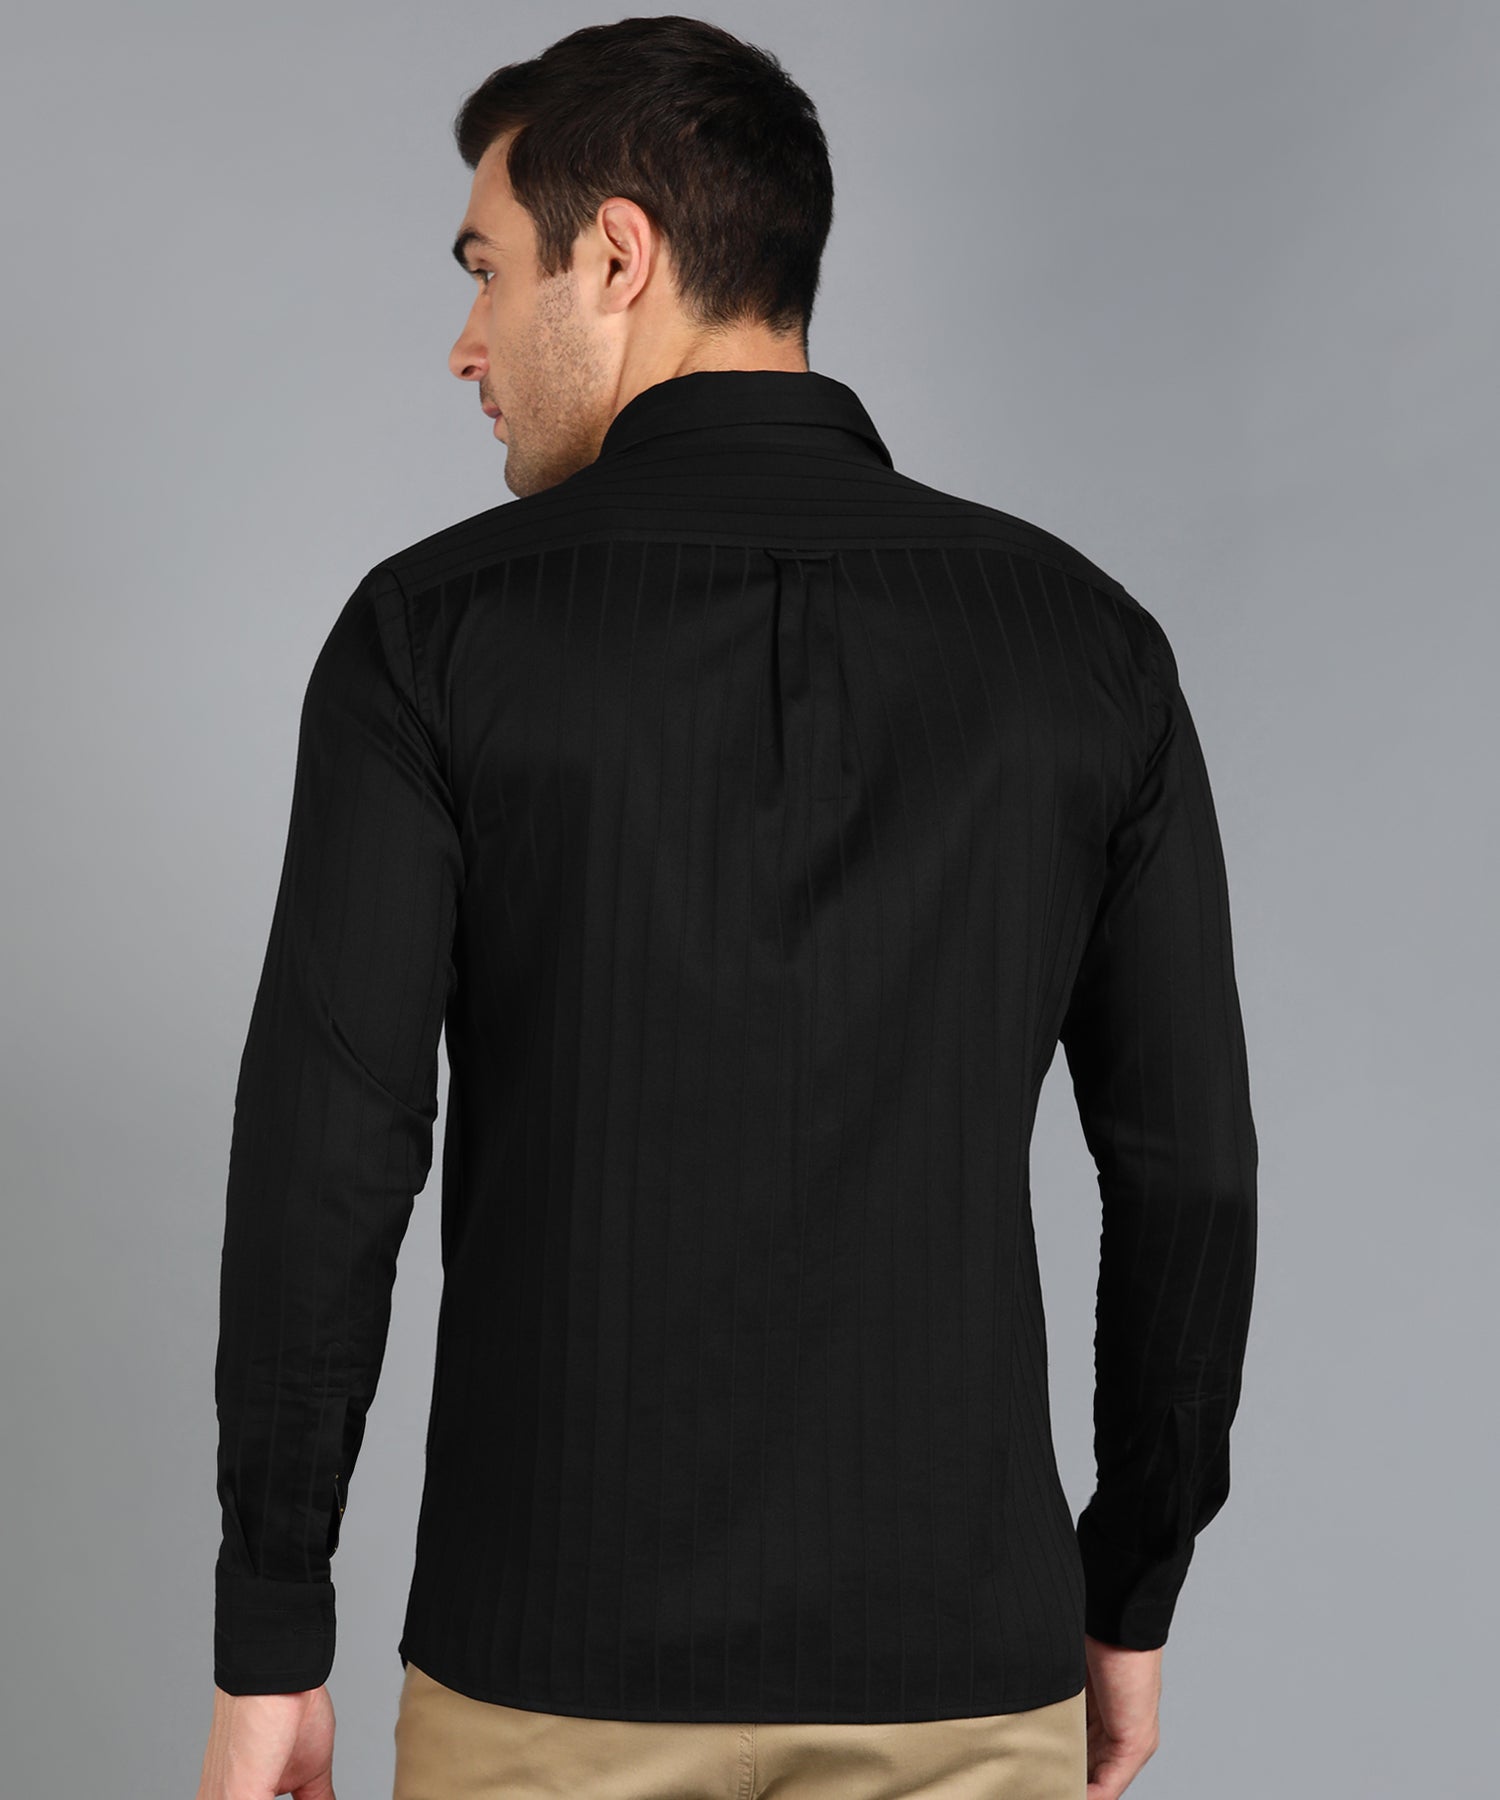 Self Striped Black Slim Fit Shirt